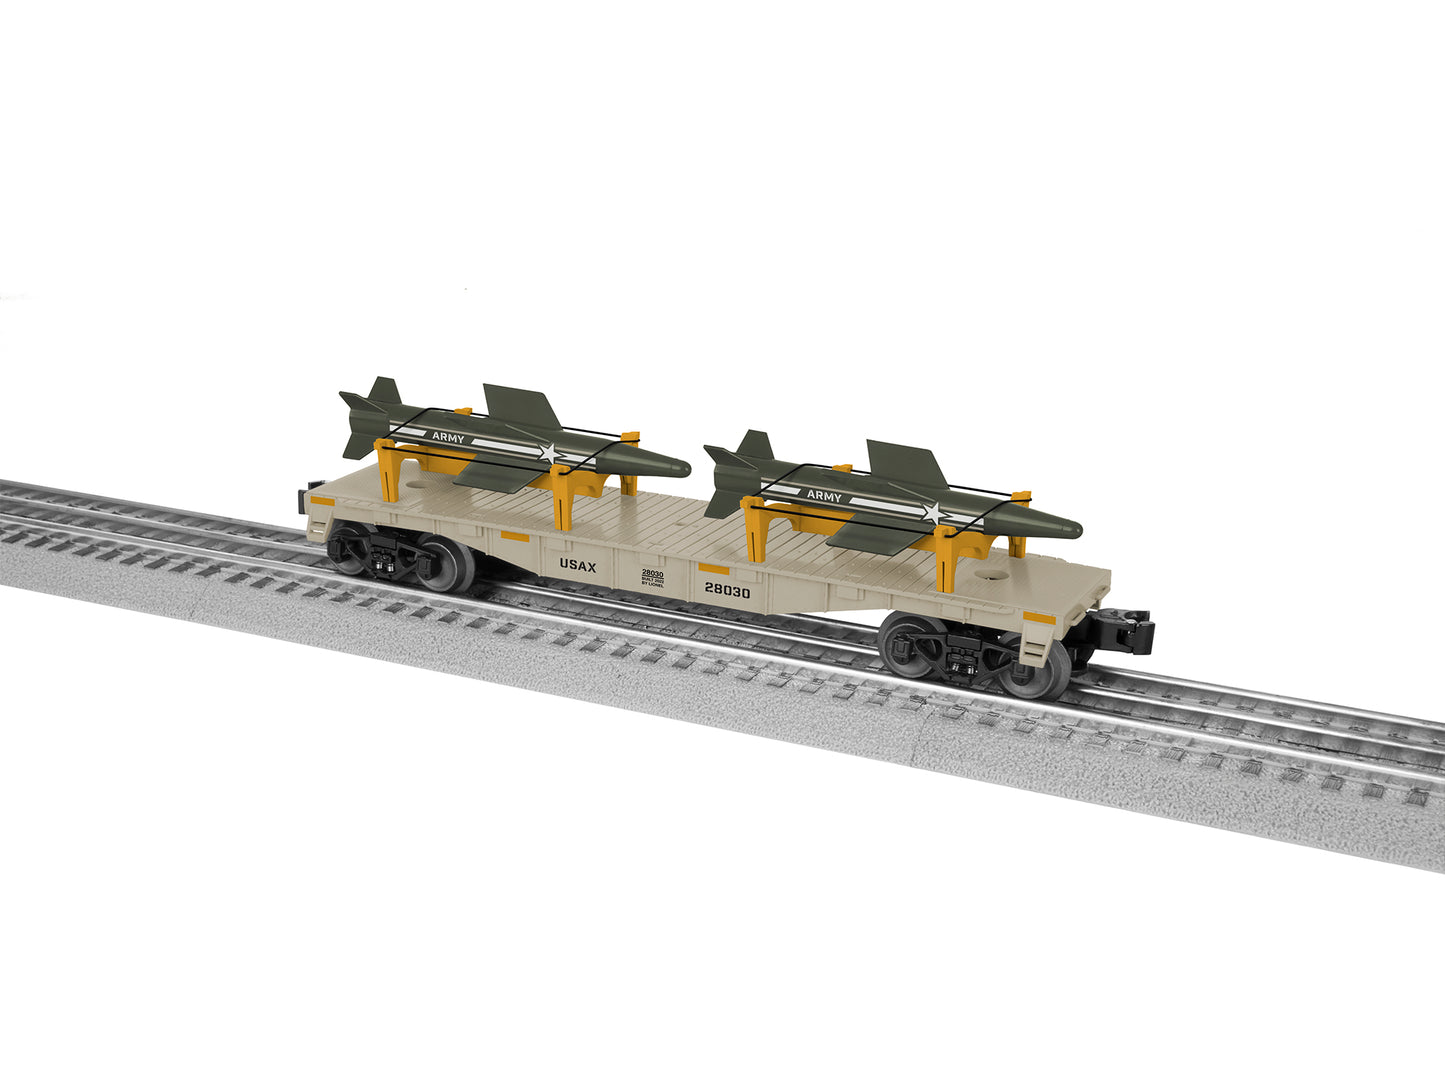 Model train set o scale Lionel Army Missile Flatcar.